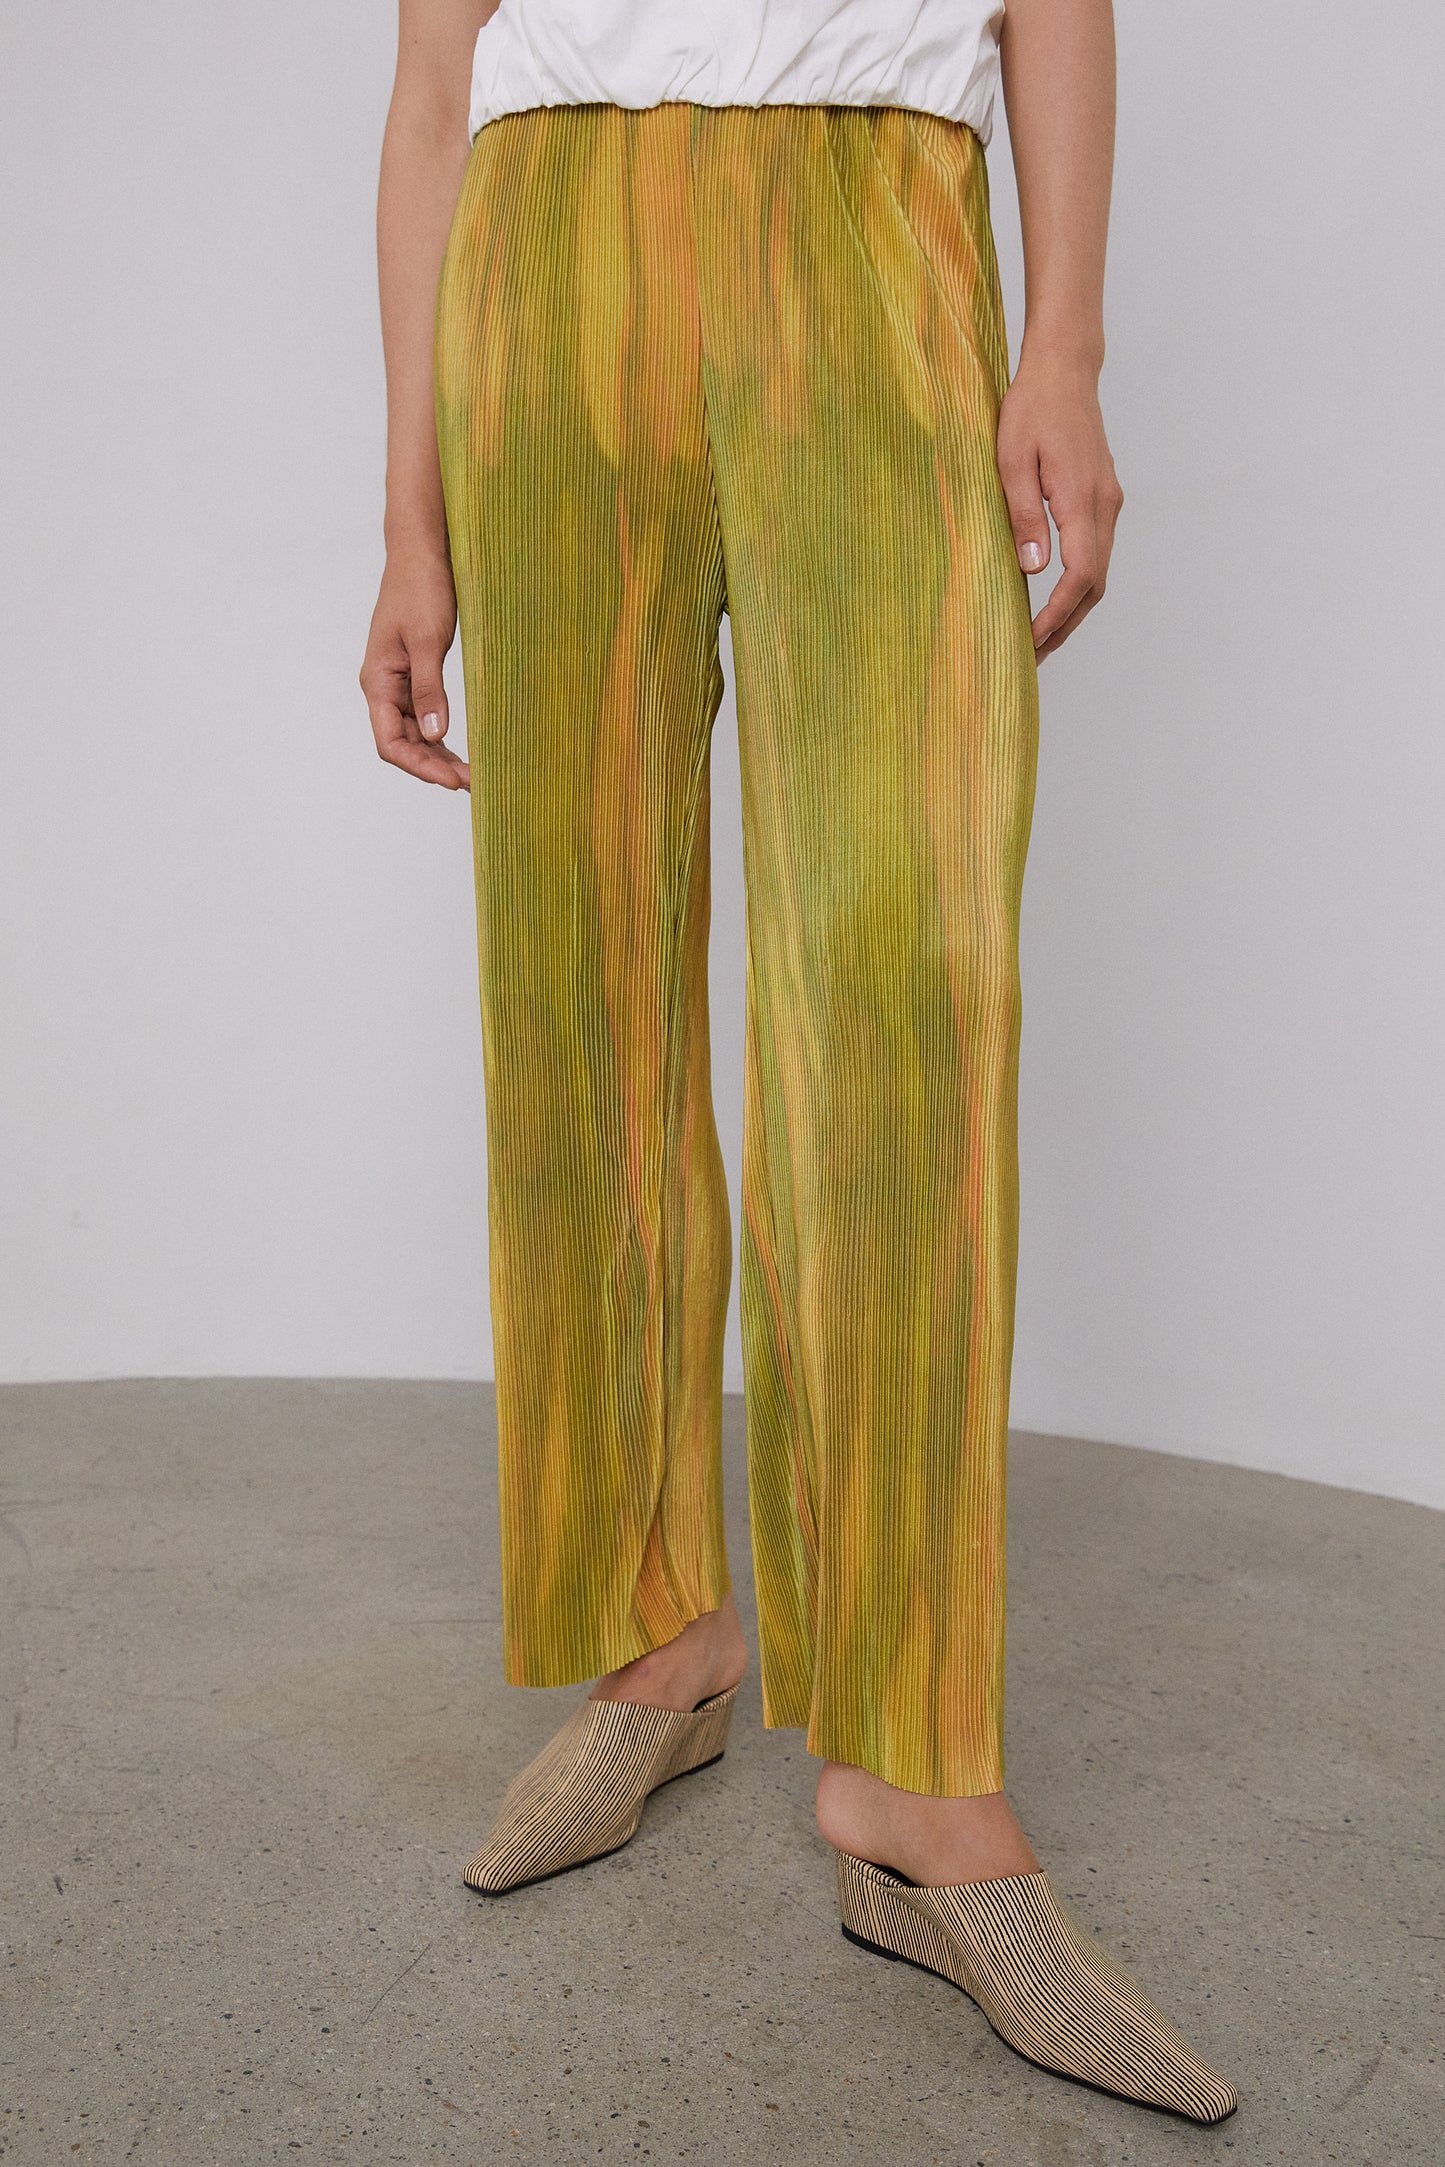 Print Pleated Pants, Green & Yellow